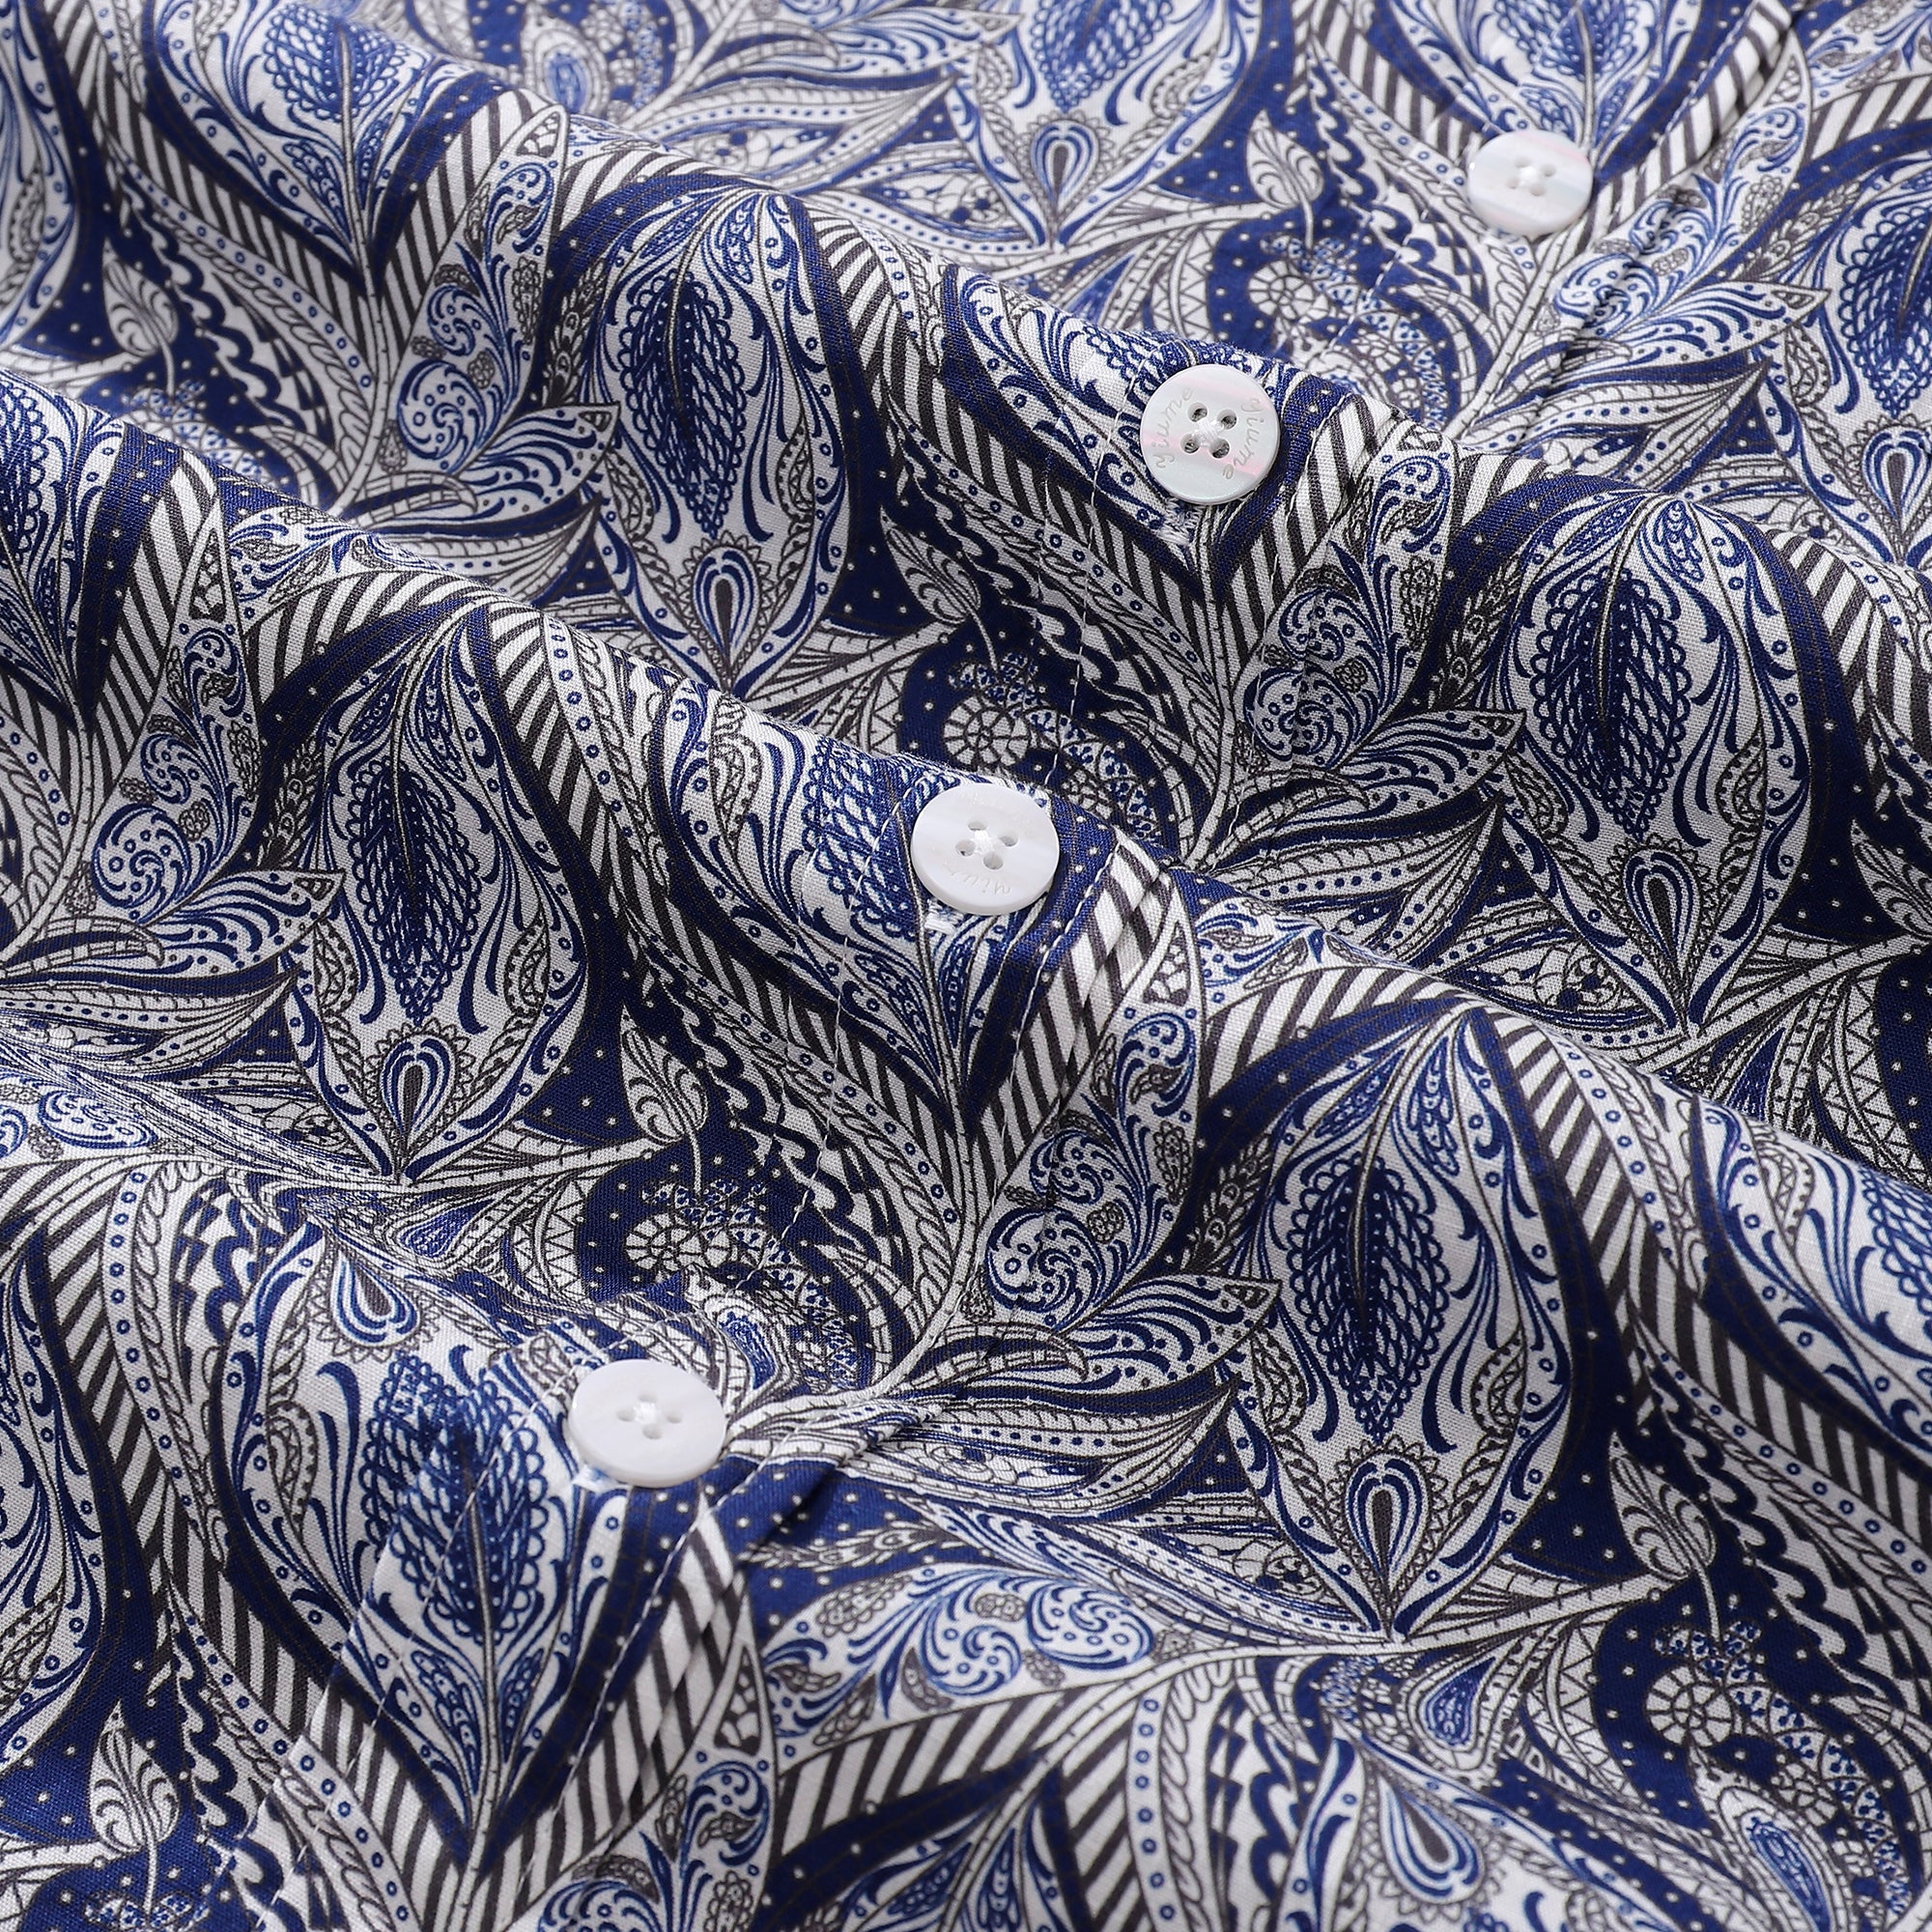 Men's Hawaiian Shirt Floral Pattern Series 1 Elm Tree Print Cotton But ...